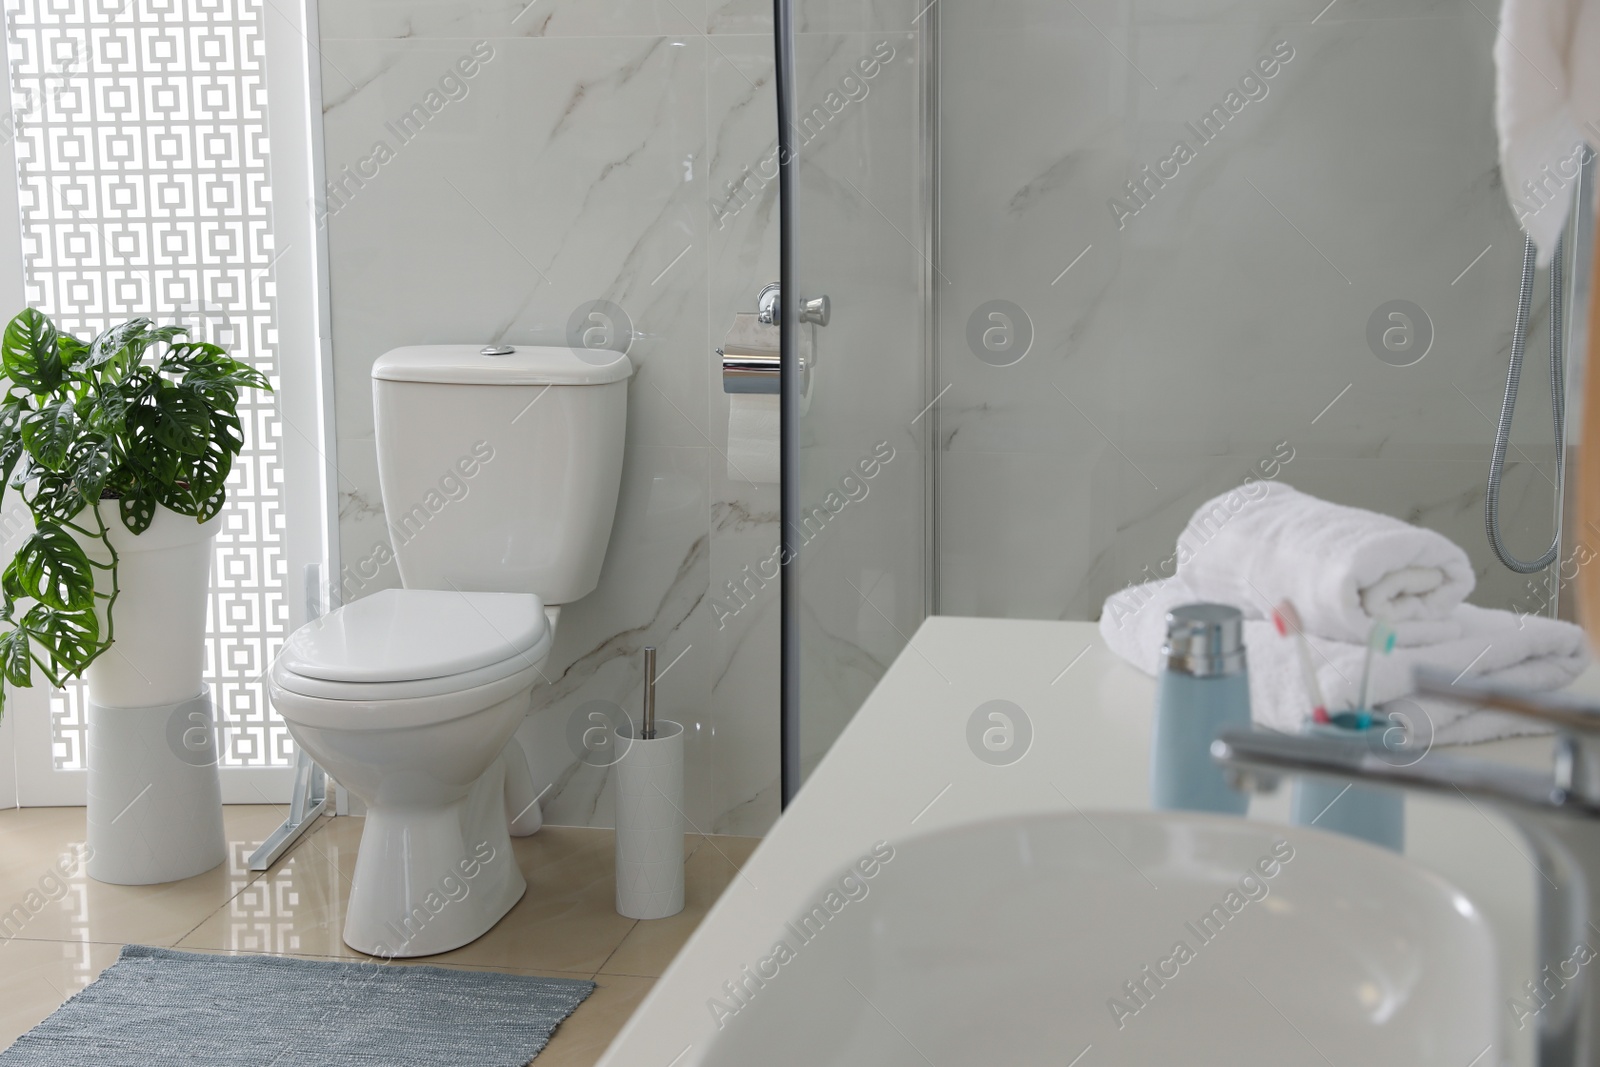 Photo of Toilet bowl near shower stall in modern bathroom